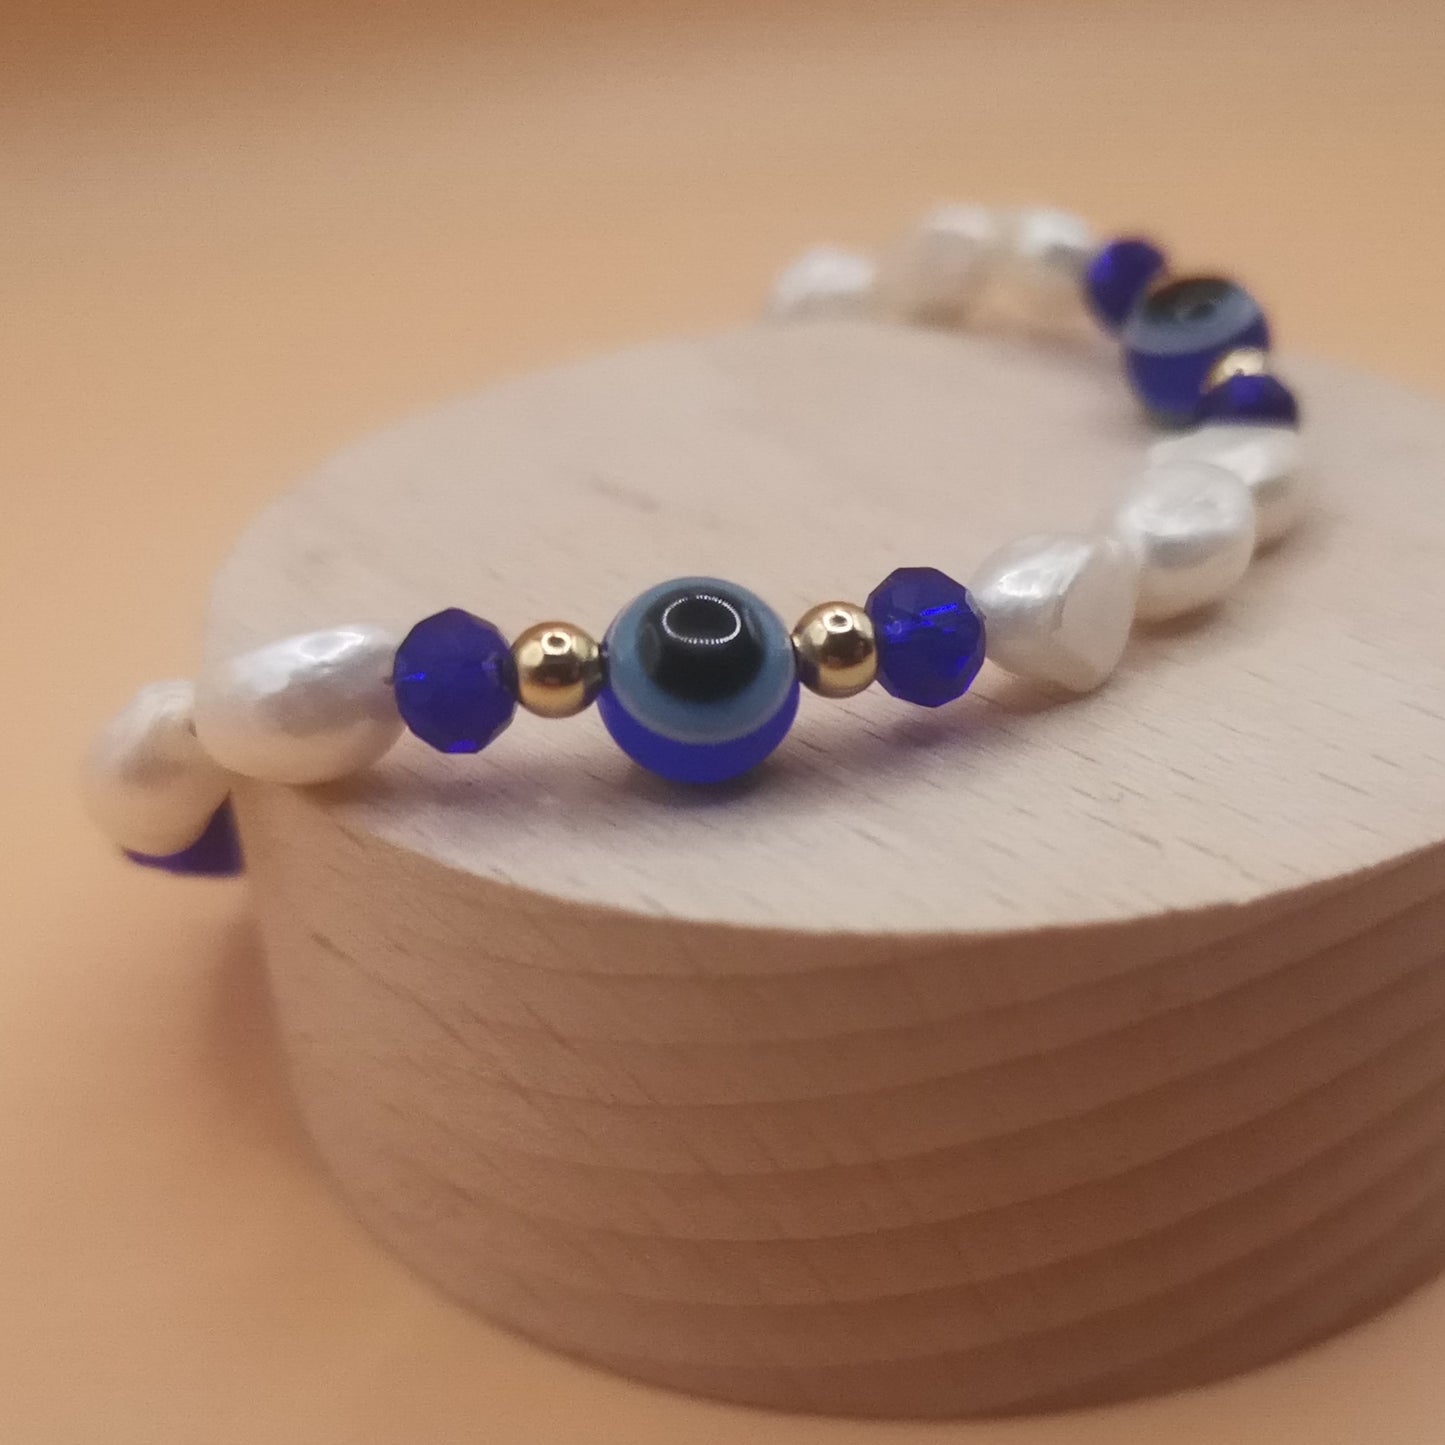 Eye of Allah pearl bracelet